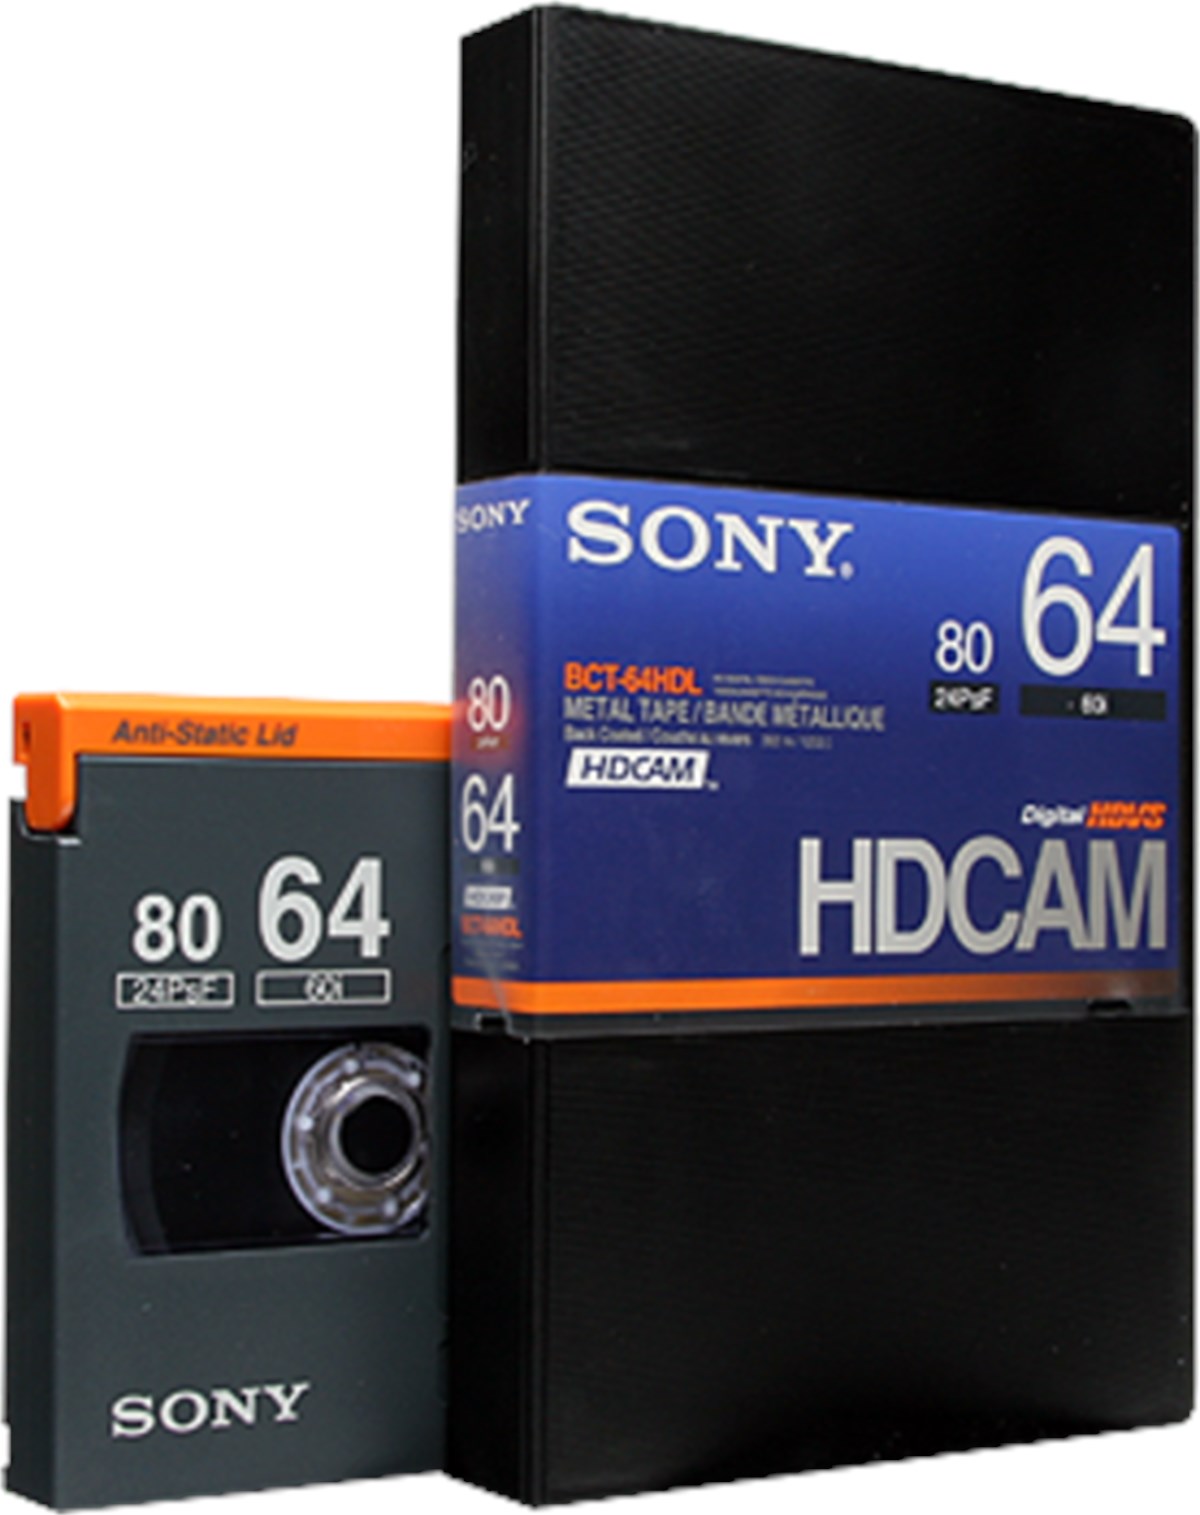 Maxell Professional HDCAM 64 60i 80 24PsF Digital Video Cassette Tape